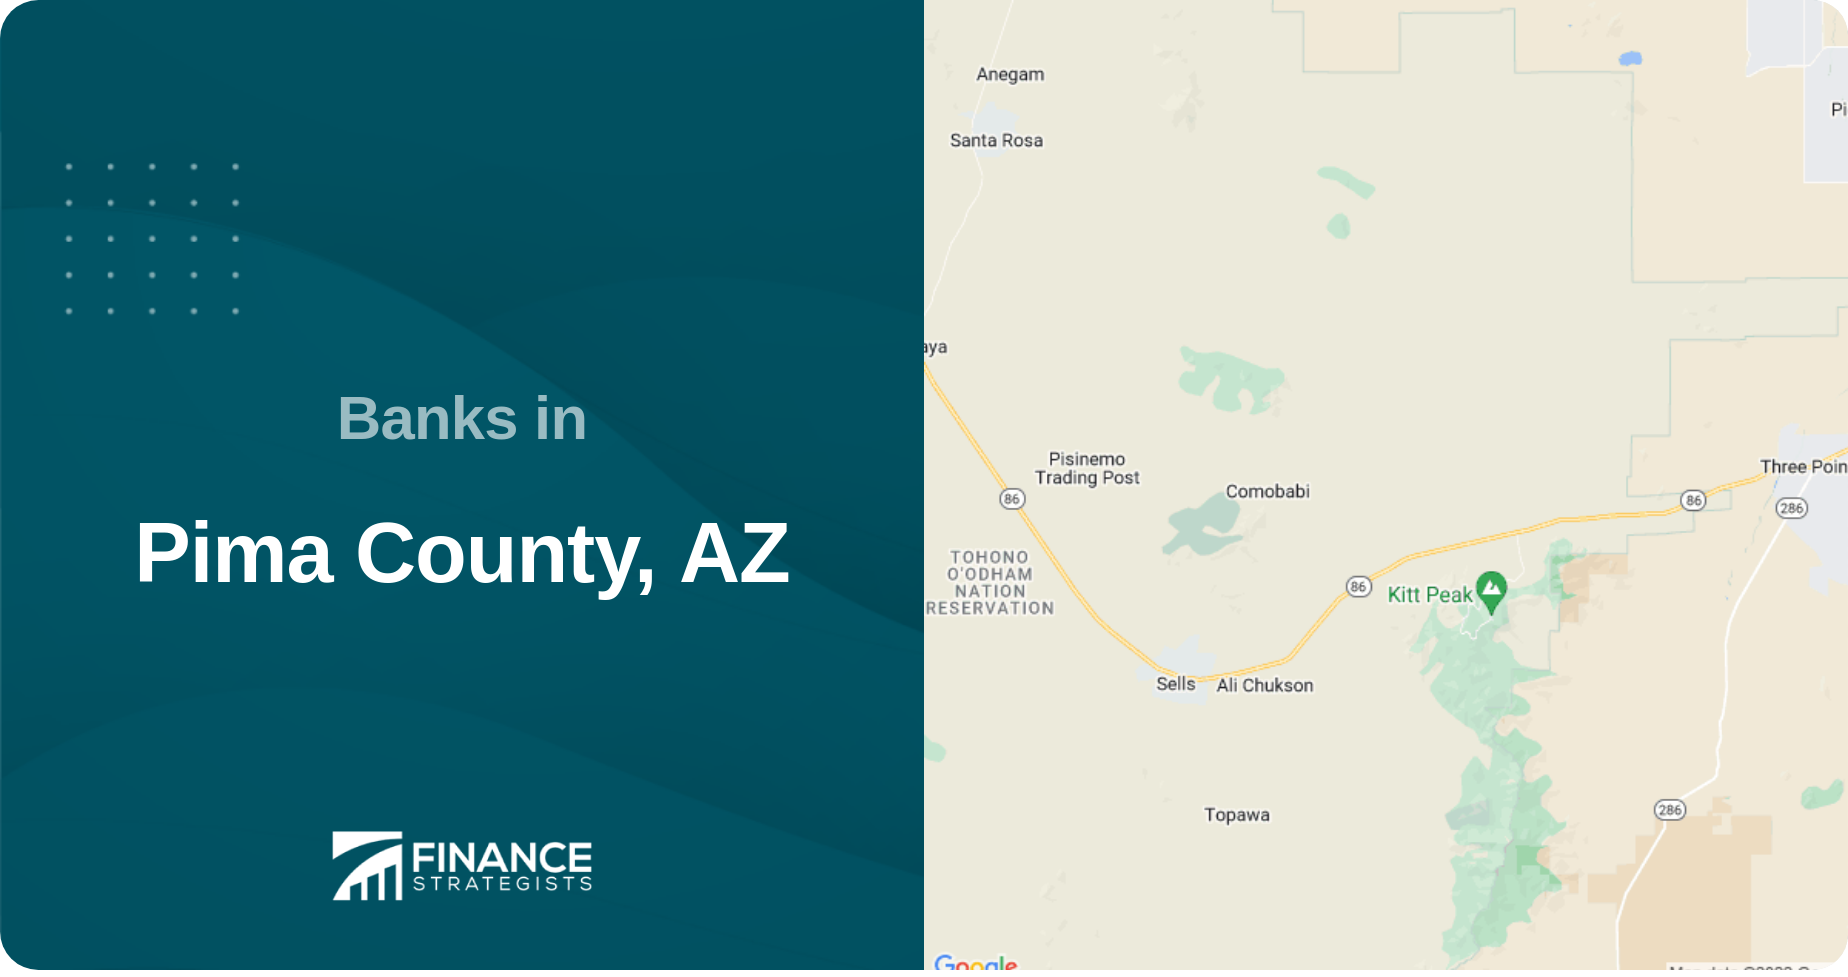 Banks in Pima County, AZ